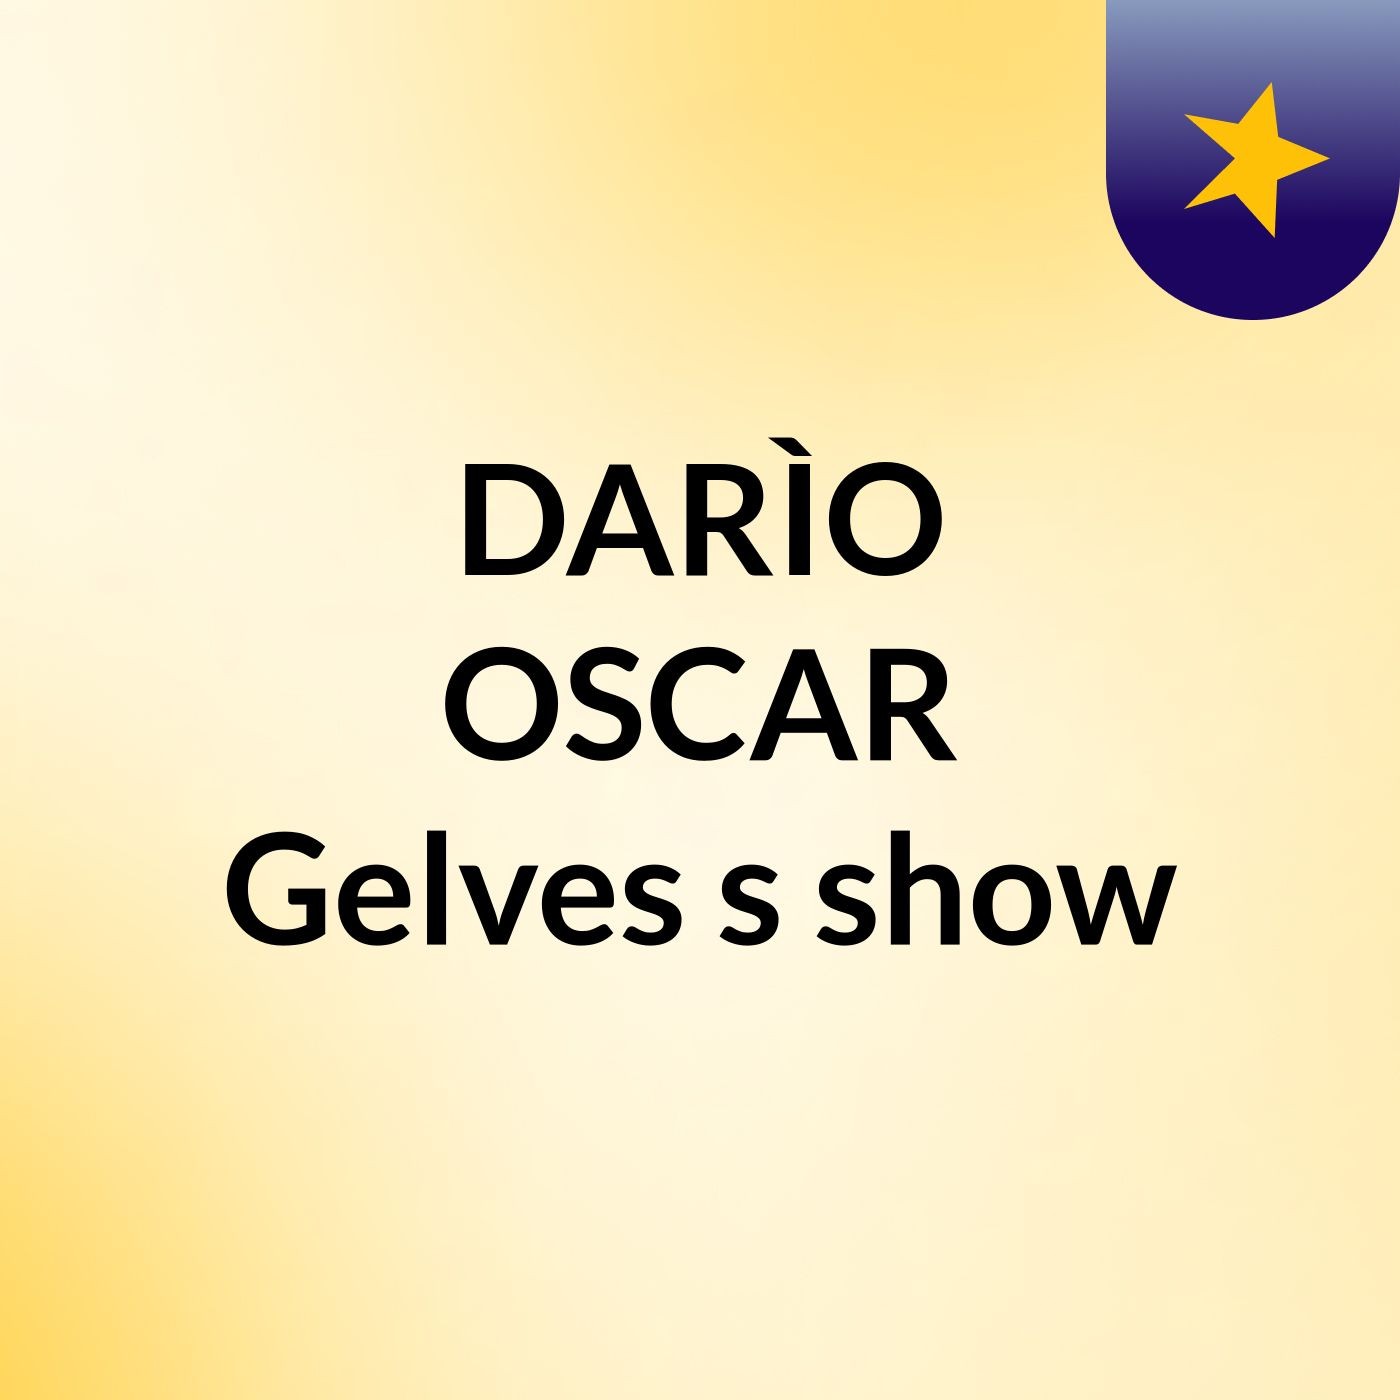 DARÌO OSCAR Gelves's show